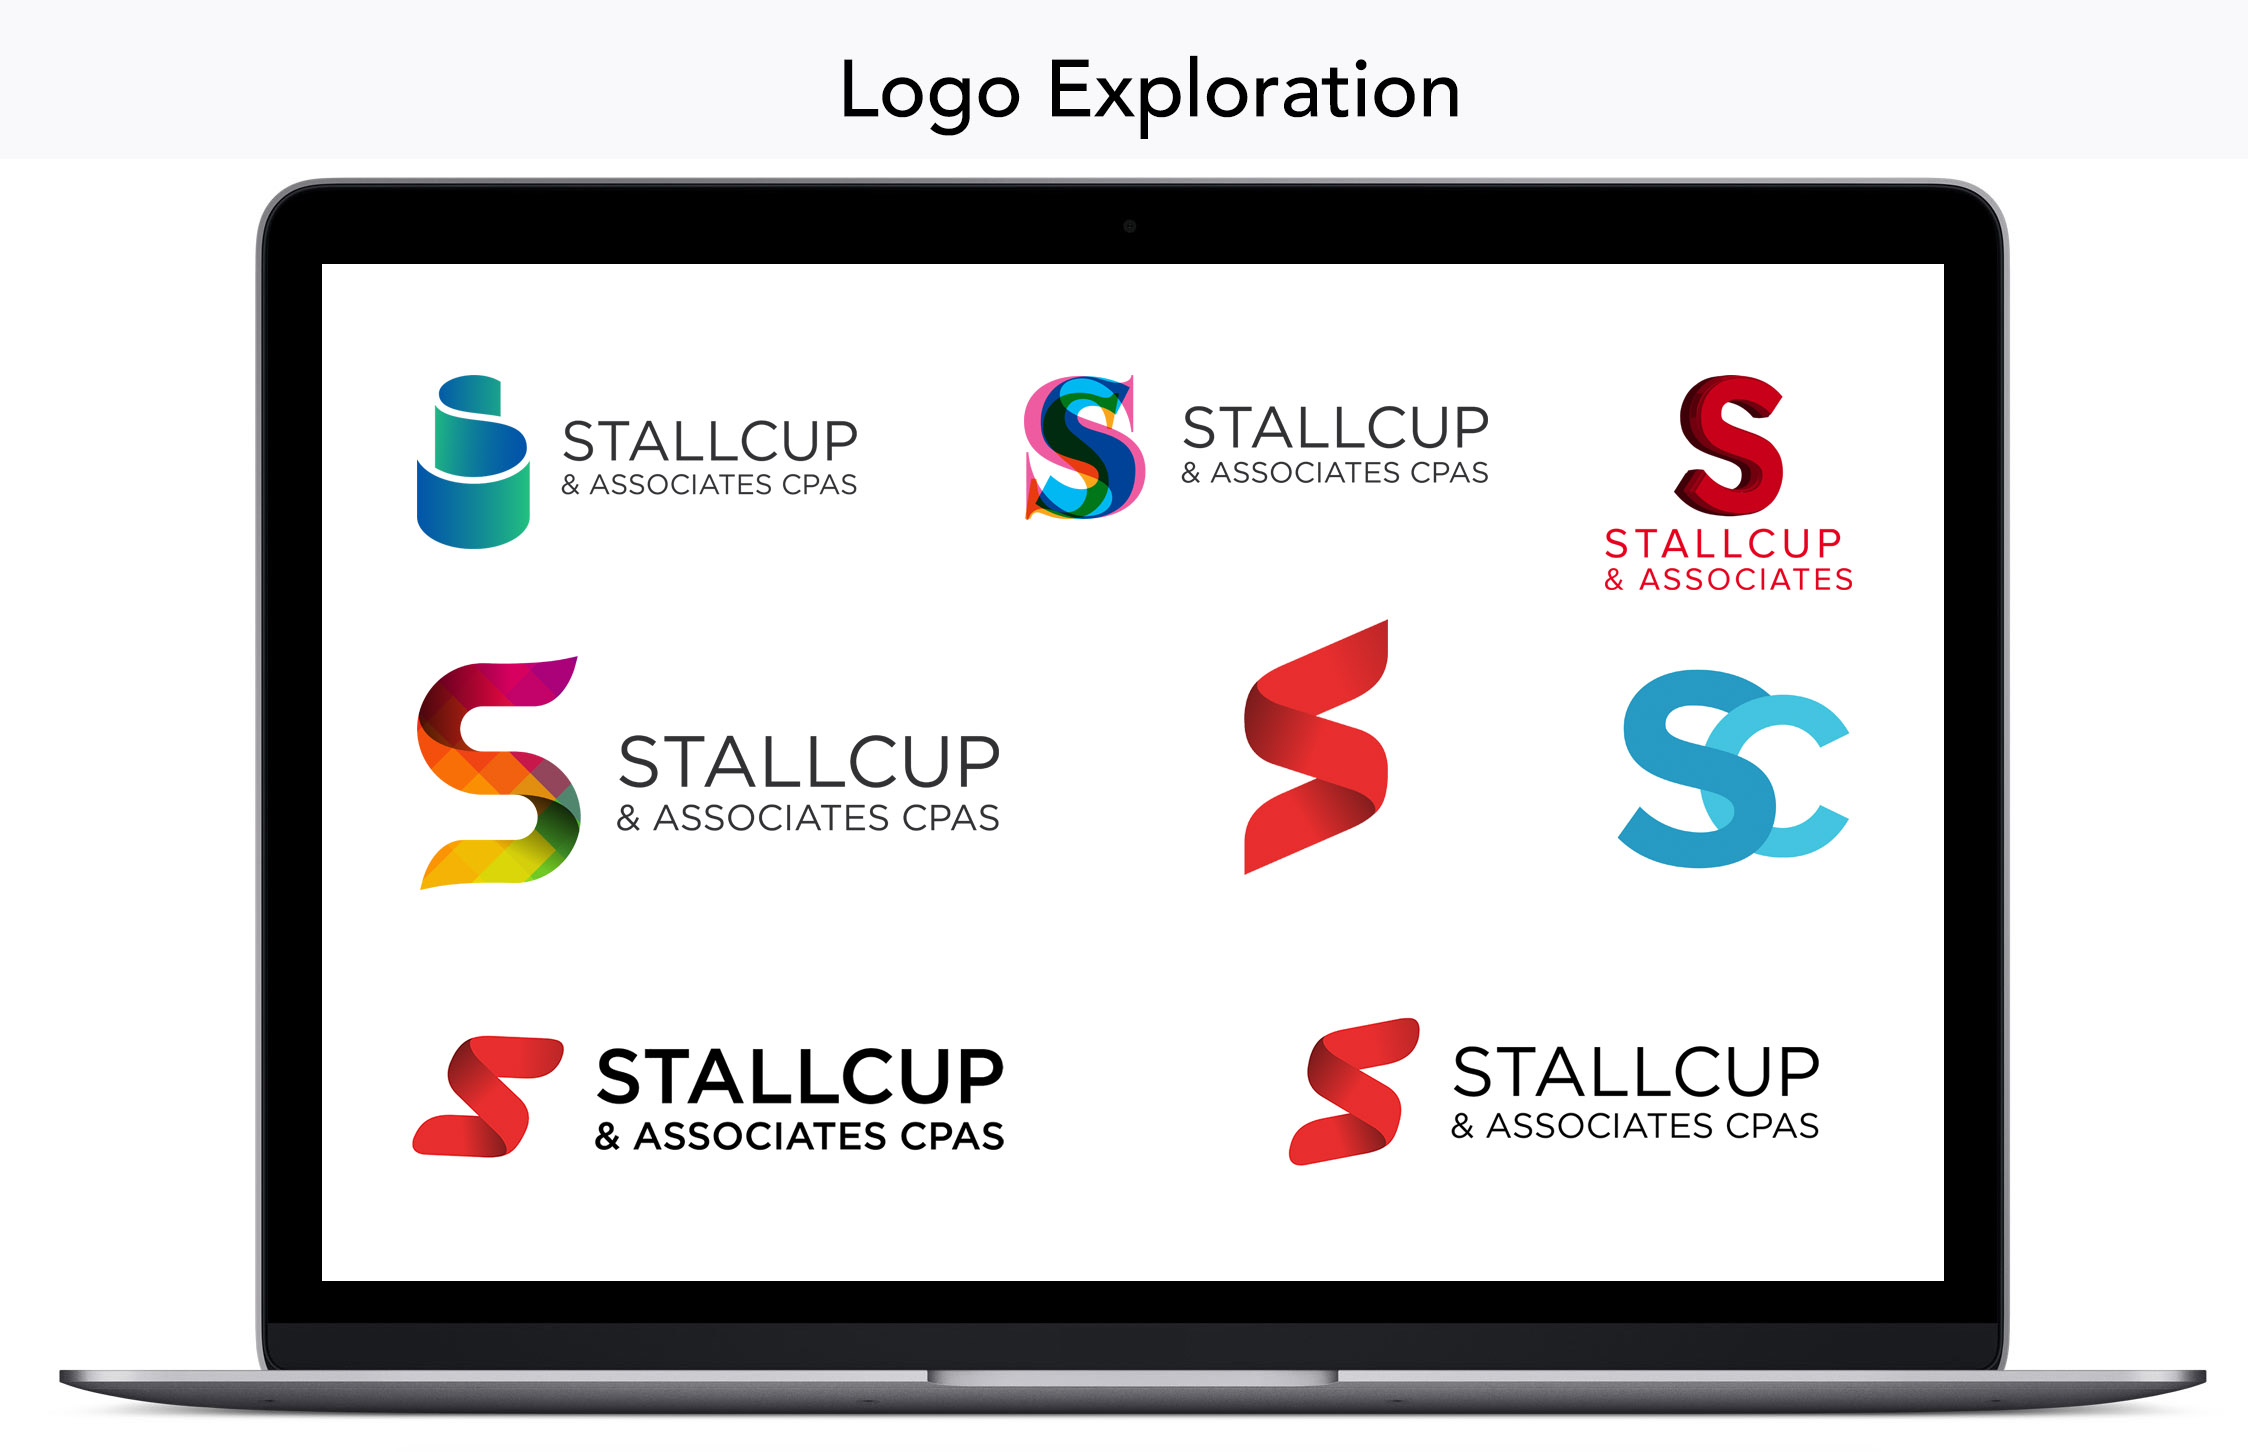 StallcupLogoExploration